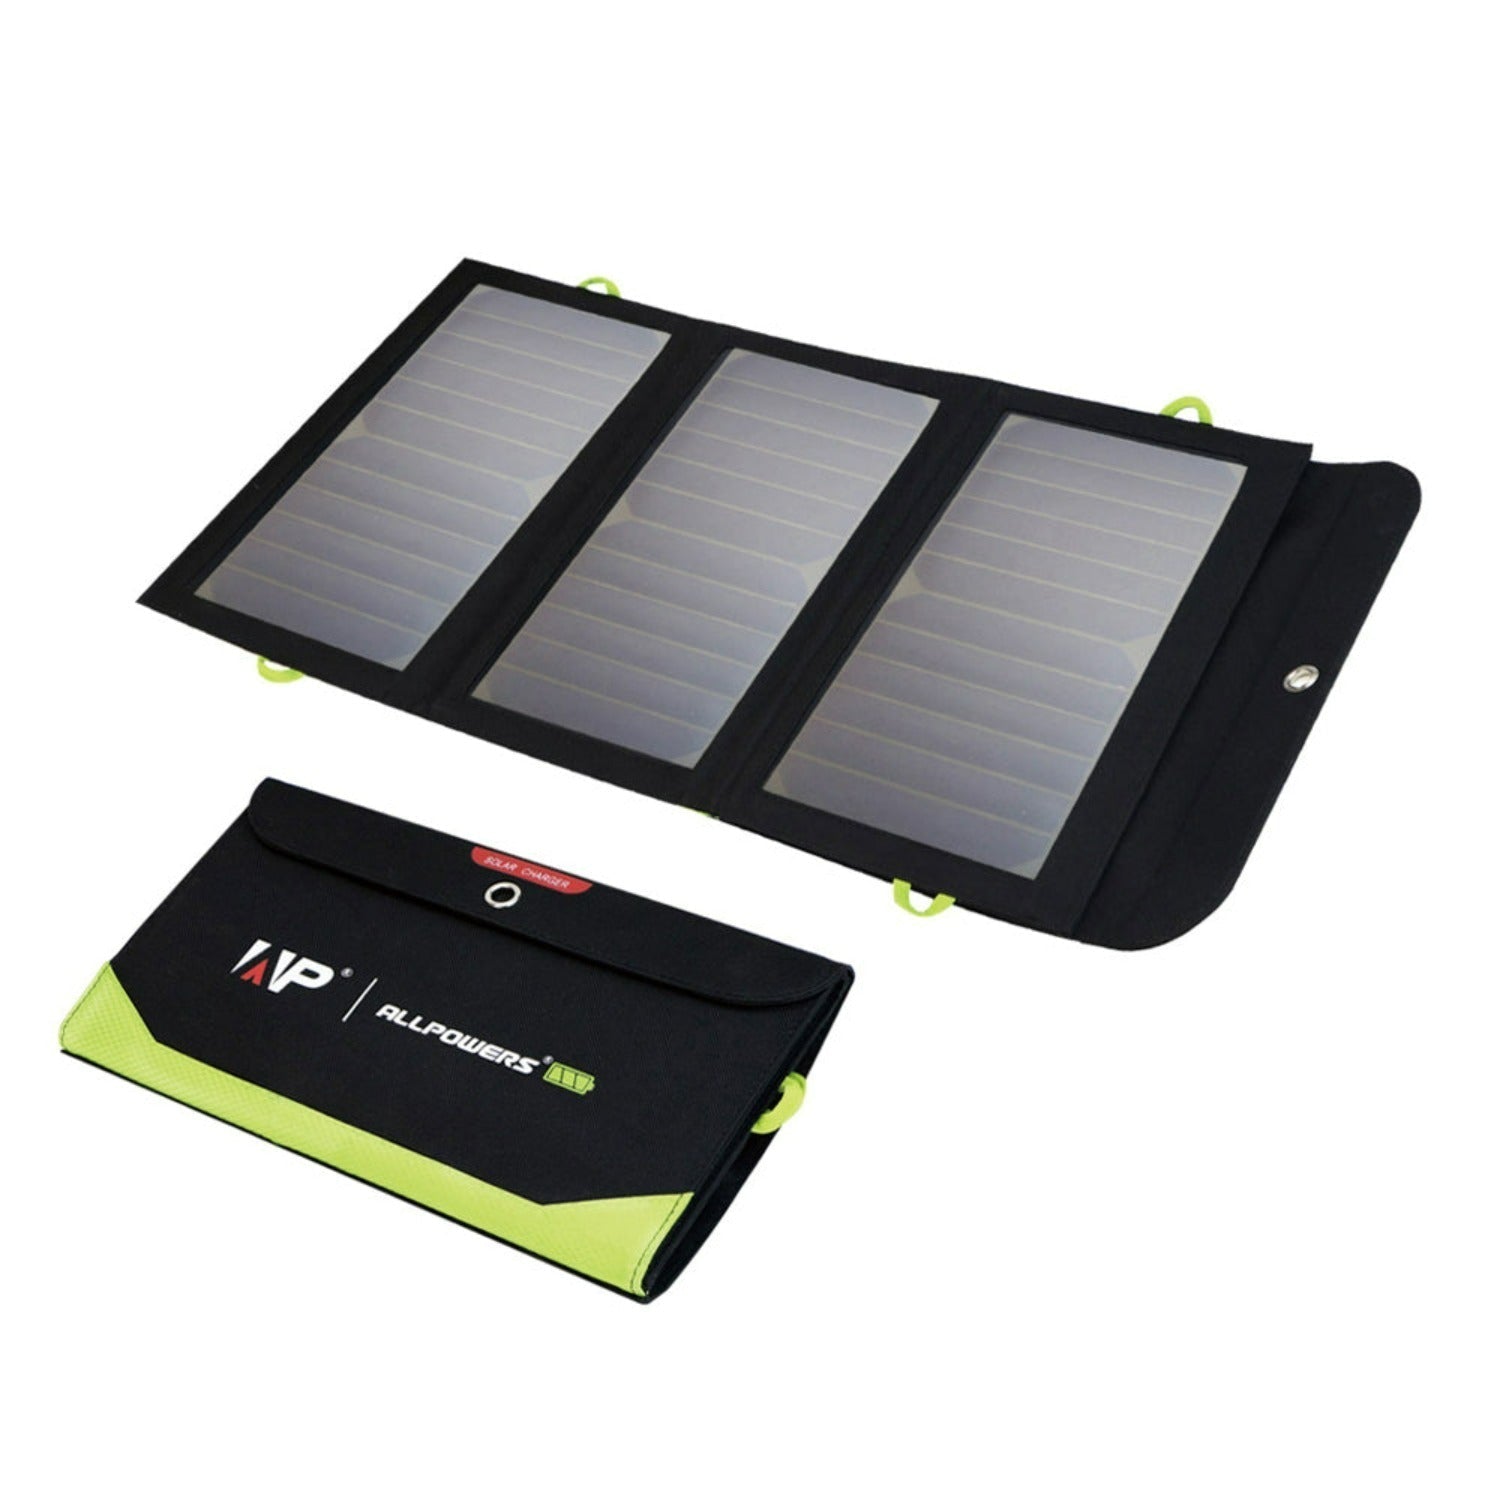 ALLPOWERS SP002 Panel solar Batería incorporada de 10000 mAh 5 V 21 W